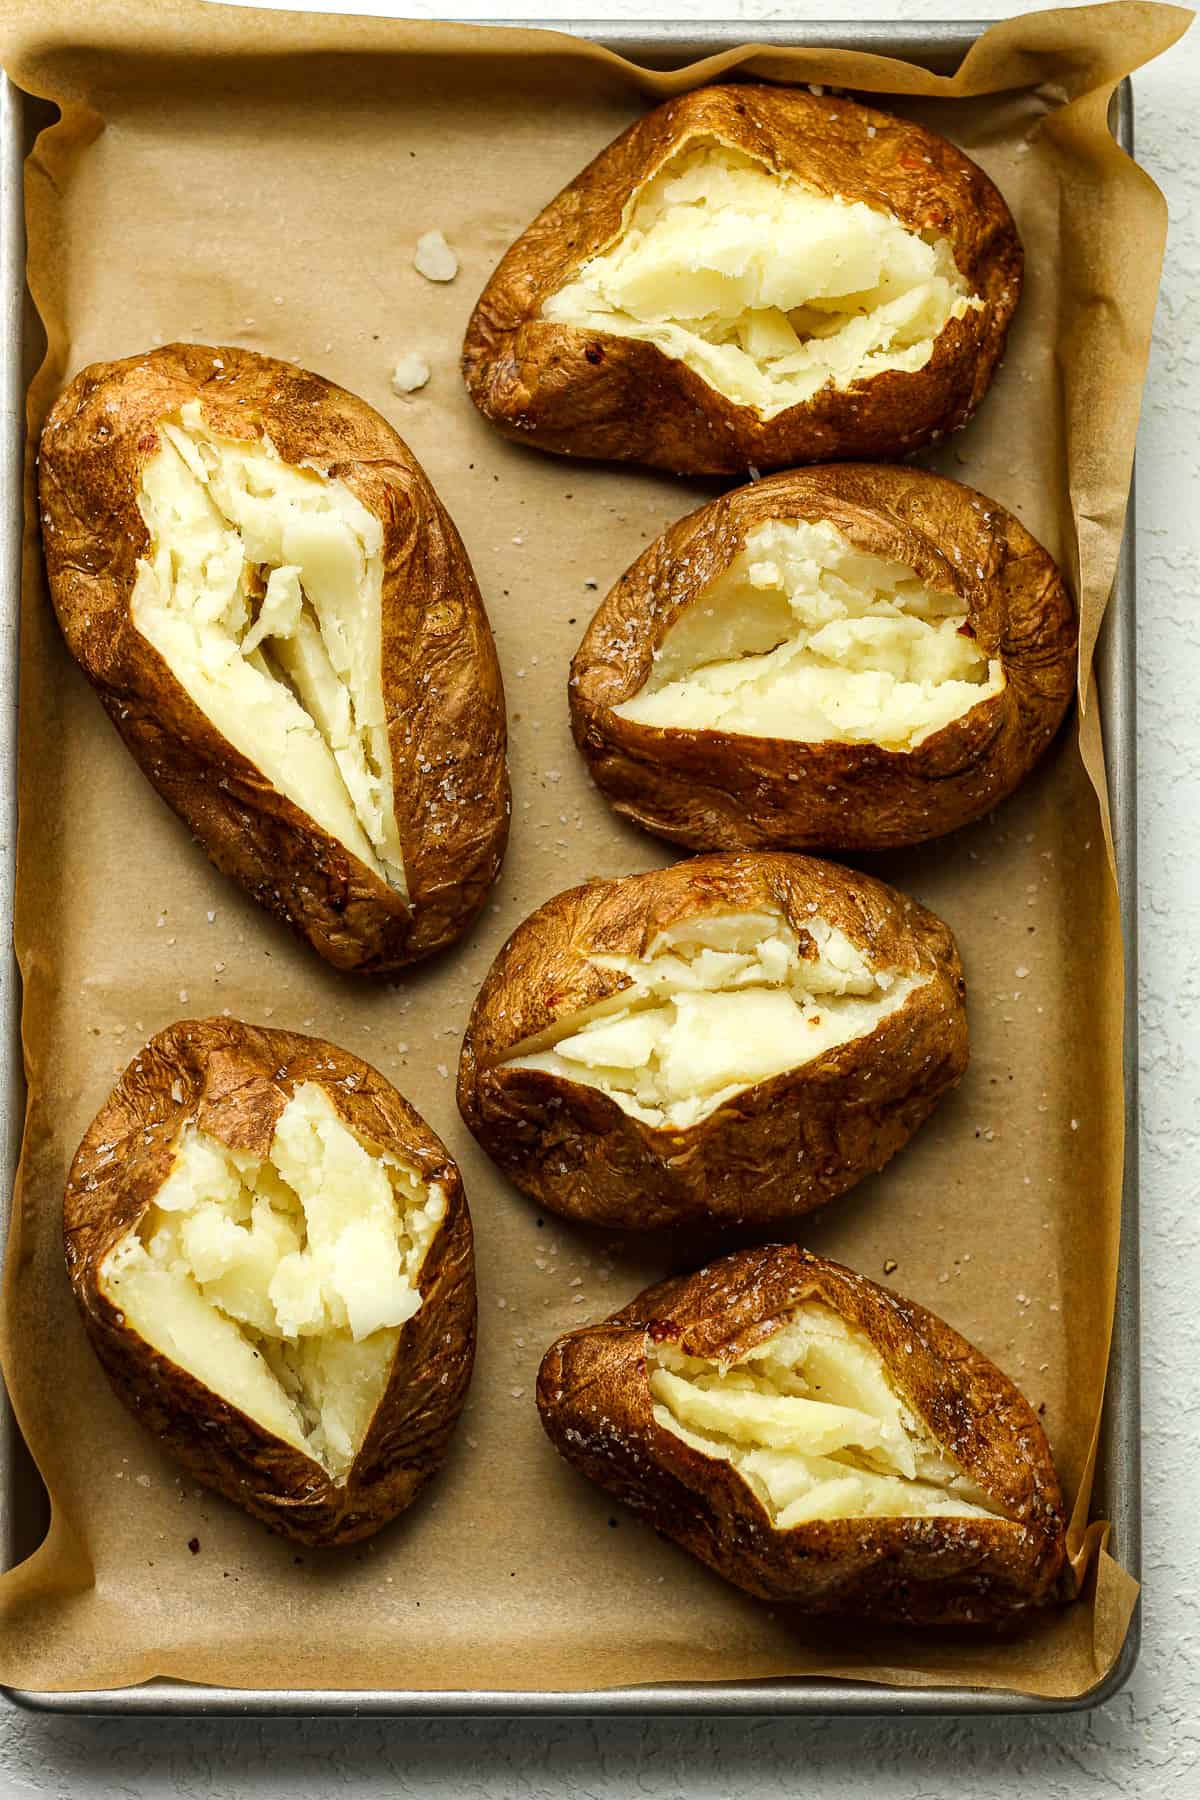 Six baked potatoes on a sheet pan.